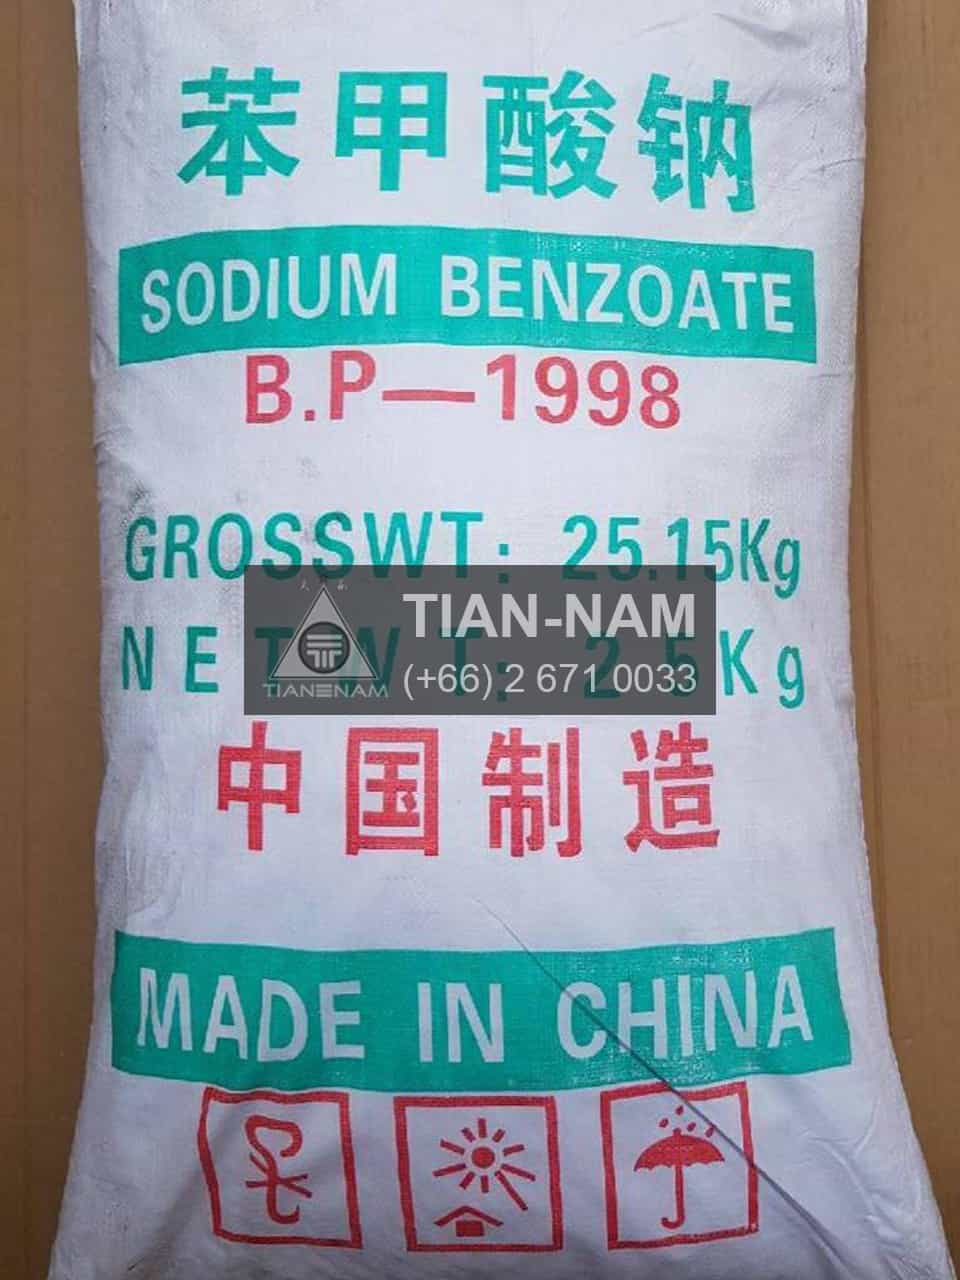 Sodium Benzoate China โซเดียม เบนโซเอท จีน